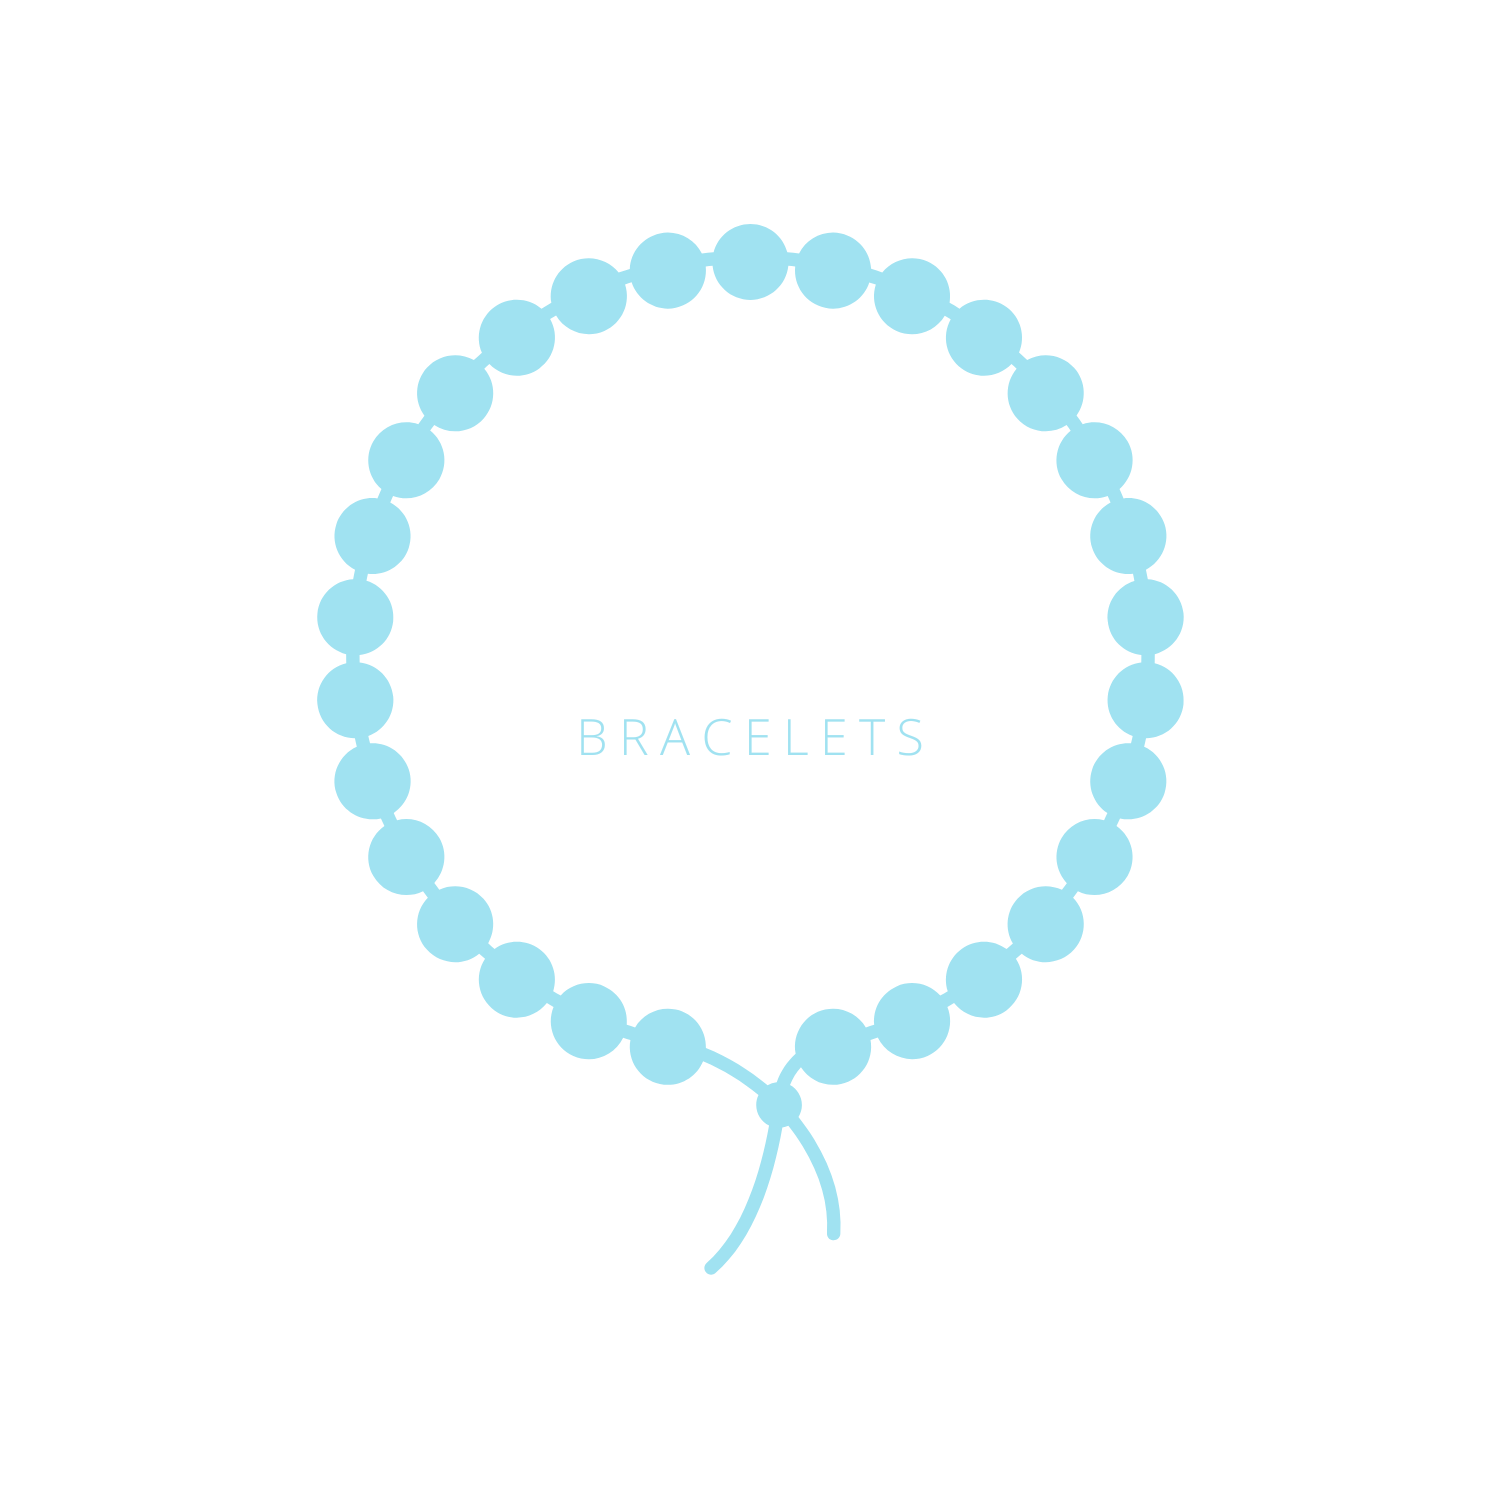 Fredinno's bracelets